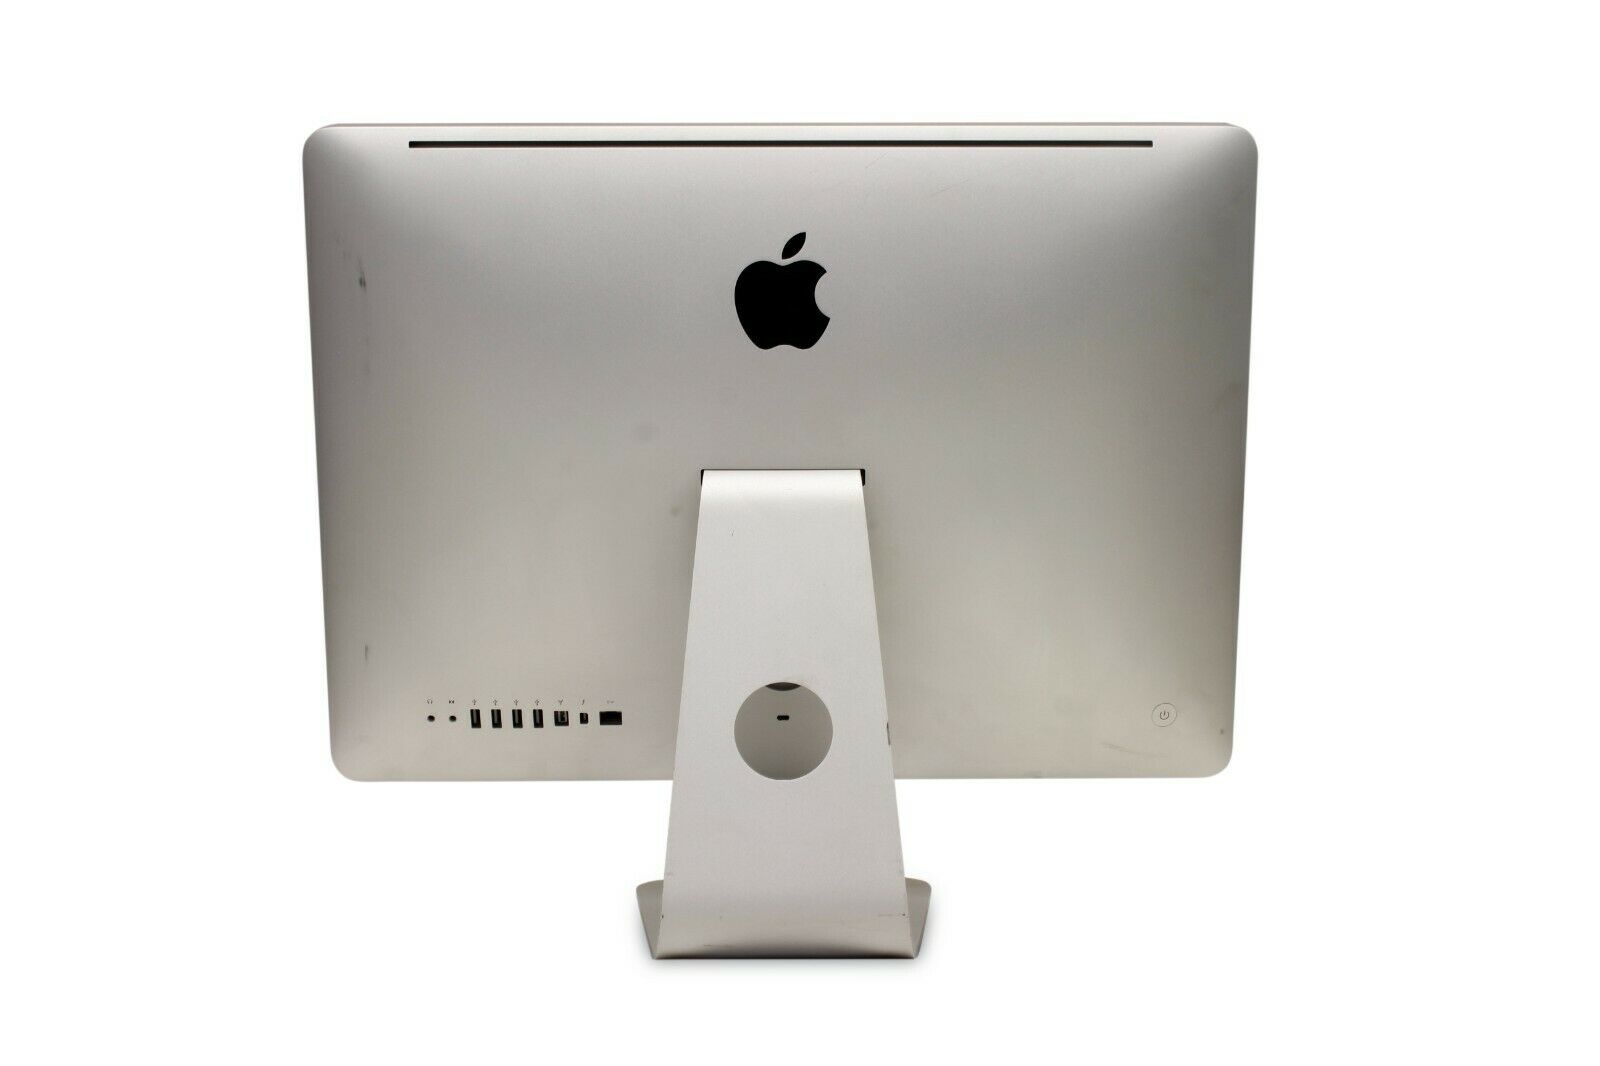 For Parts: Apple iMac 2011 21.5" (Intel Core i5, 4GB RAM, No HDD)